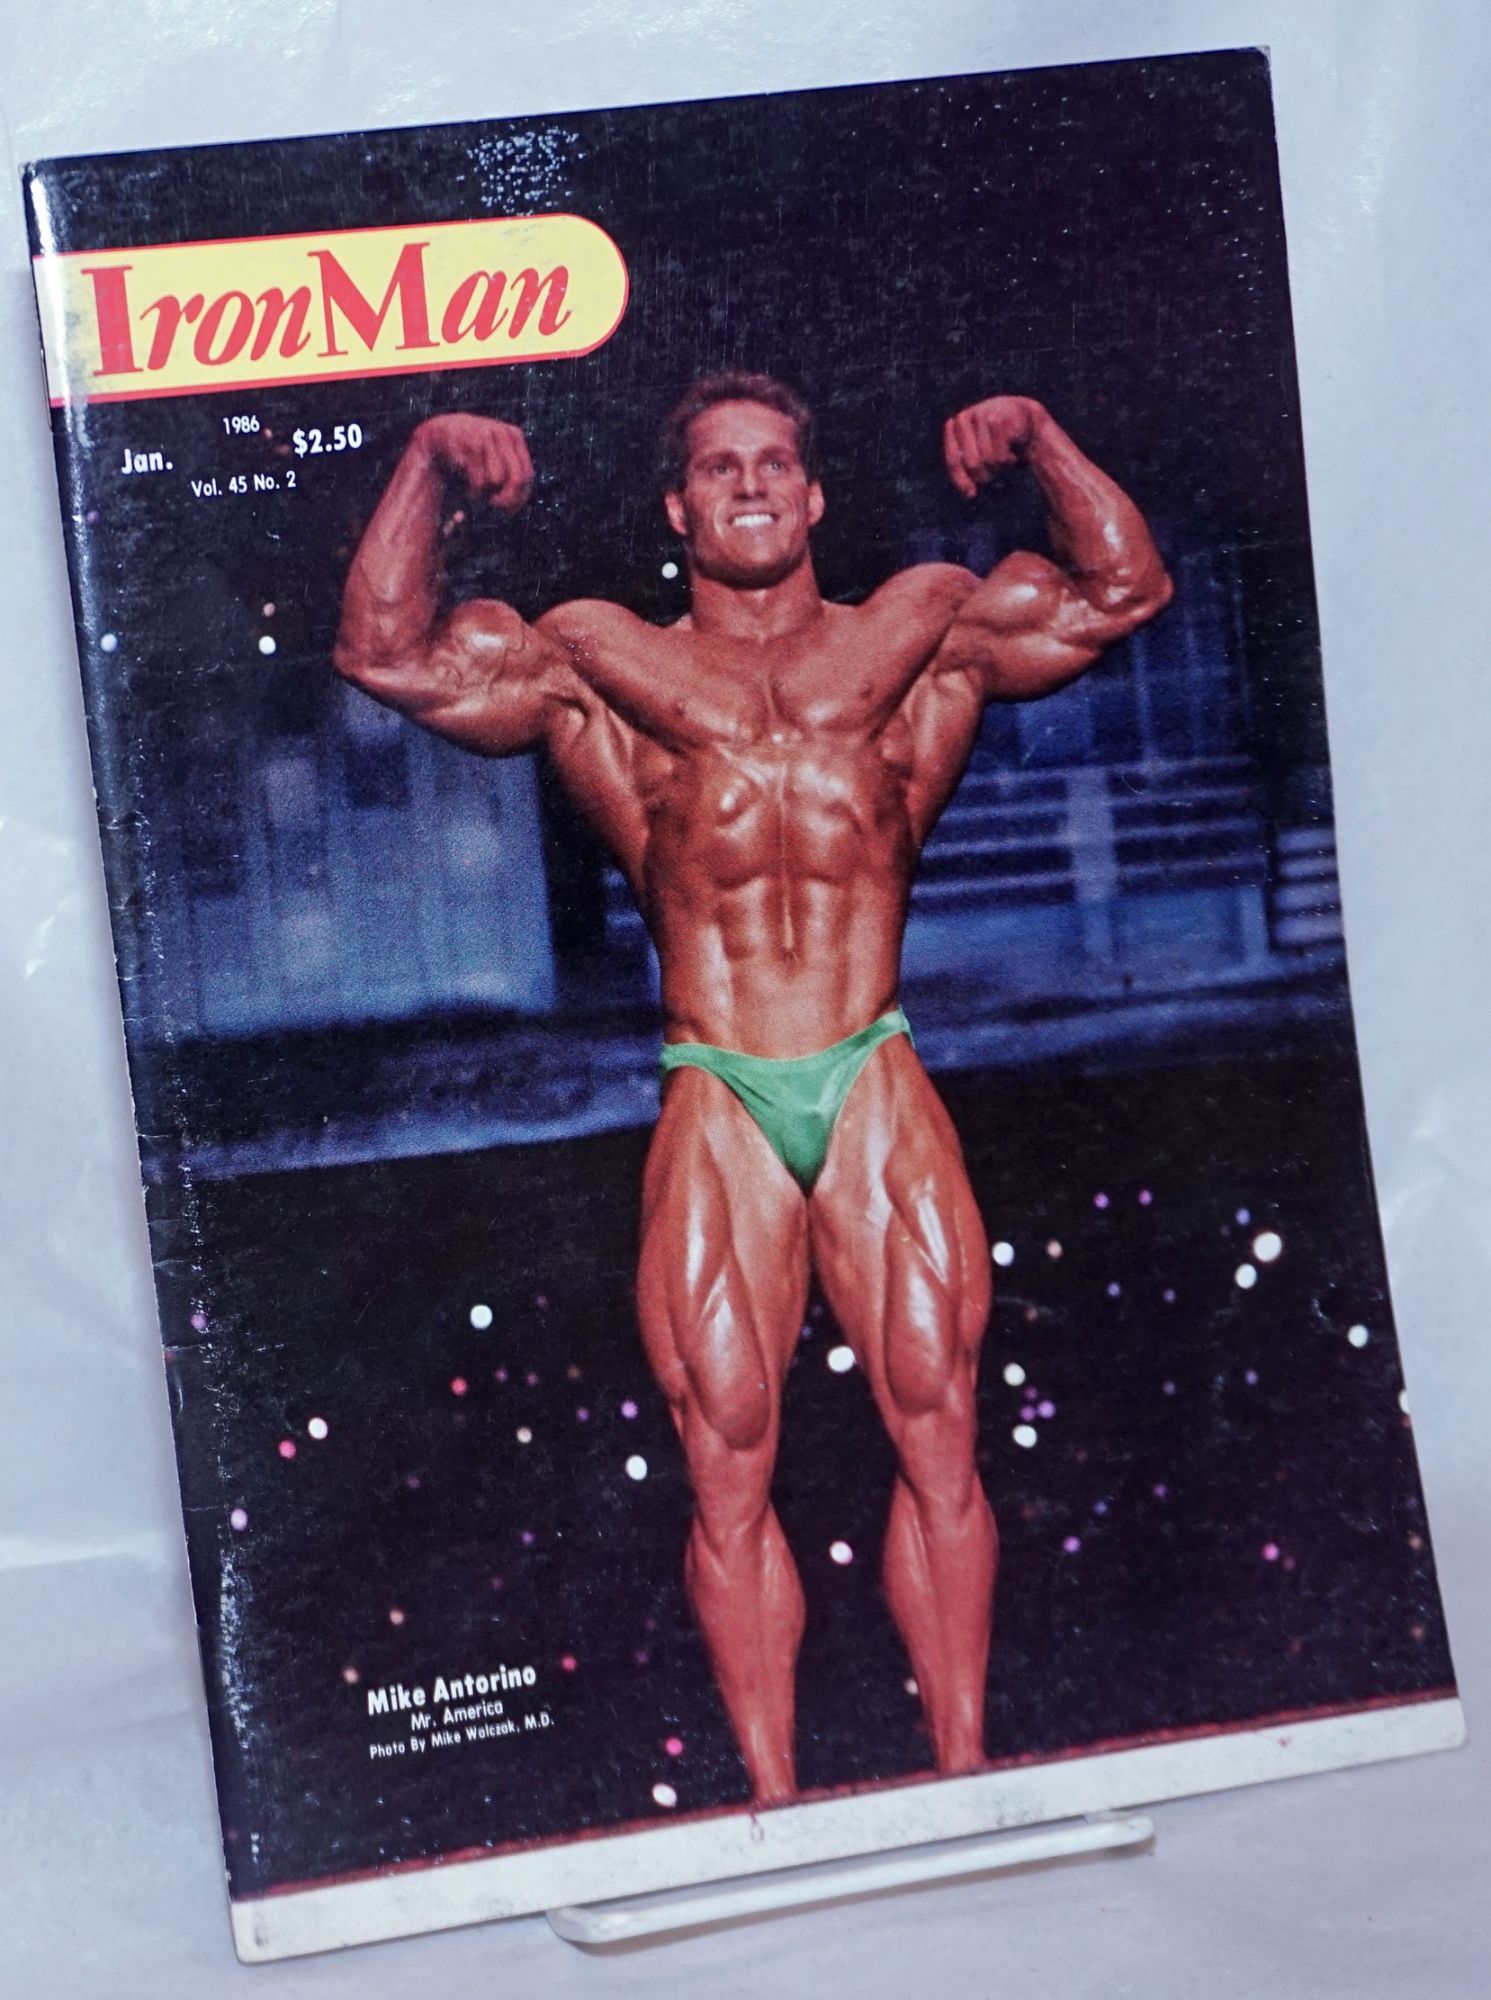 Iron Man magazine: vol. 45, #2, Jan. 1986: Mike Antorio; Mr